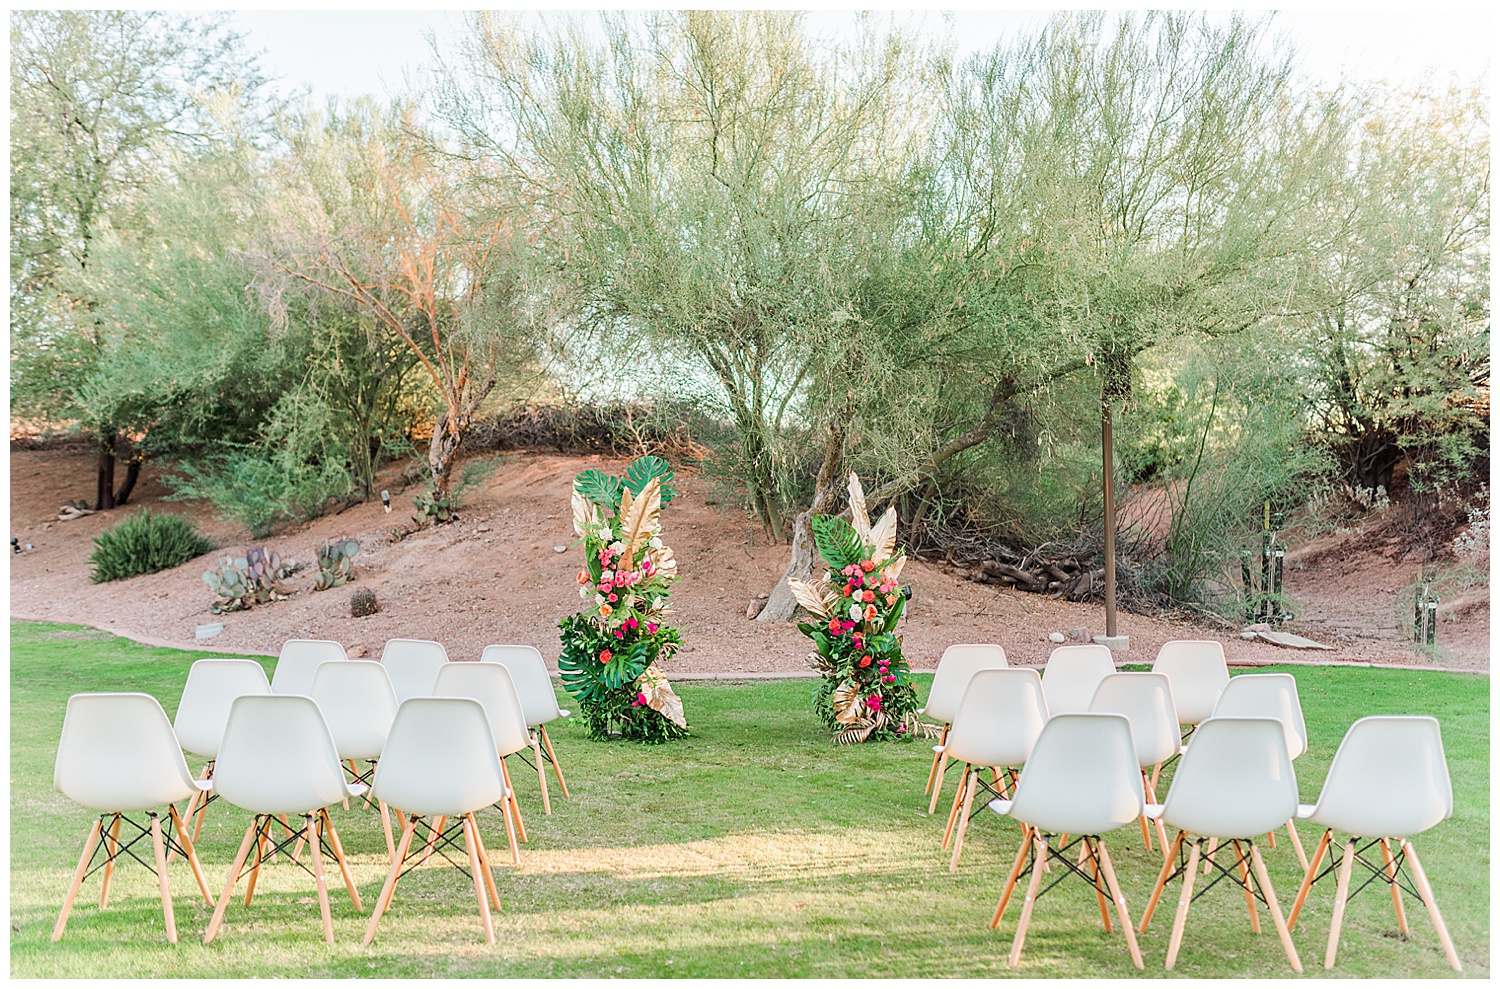 wedding+inspo+New+Mexico+wedding+photographer+vibrant+wedding+tropical+wedding+decor+palm+cake+balloons+ceremony